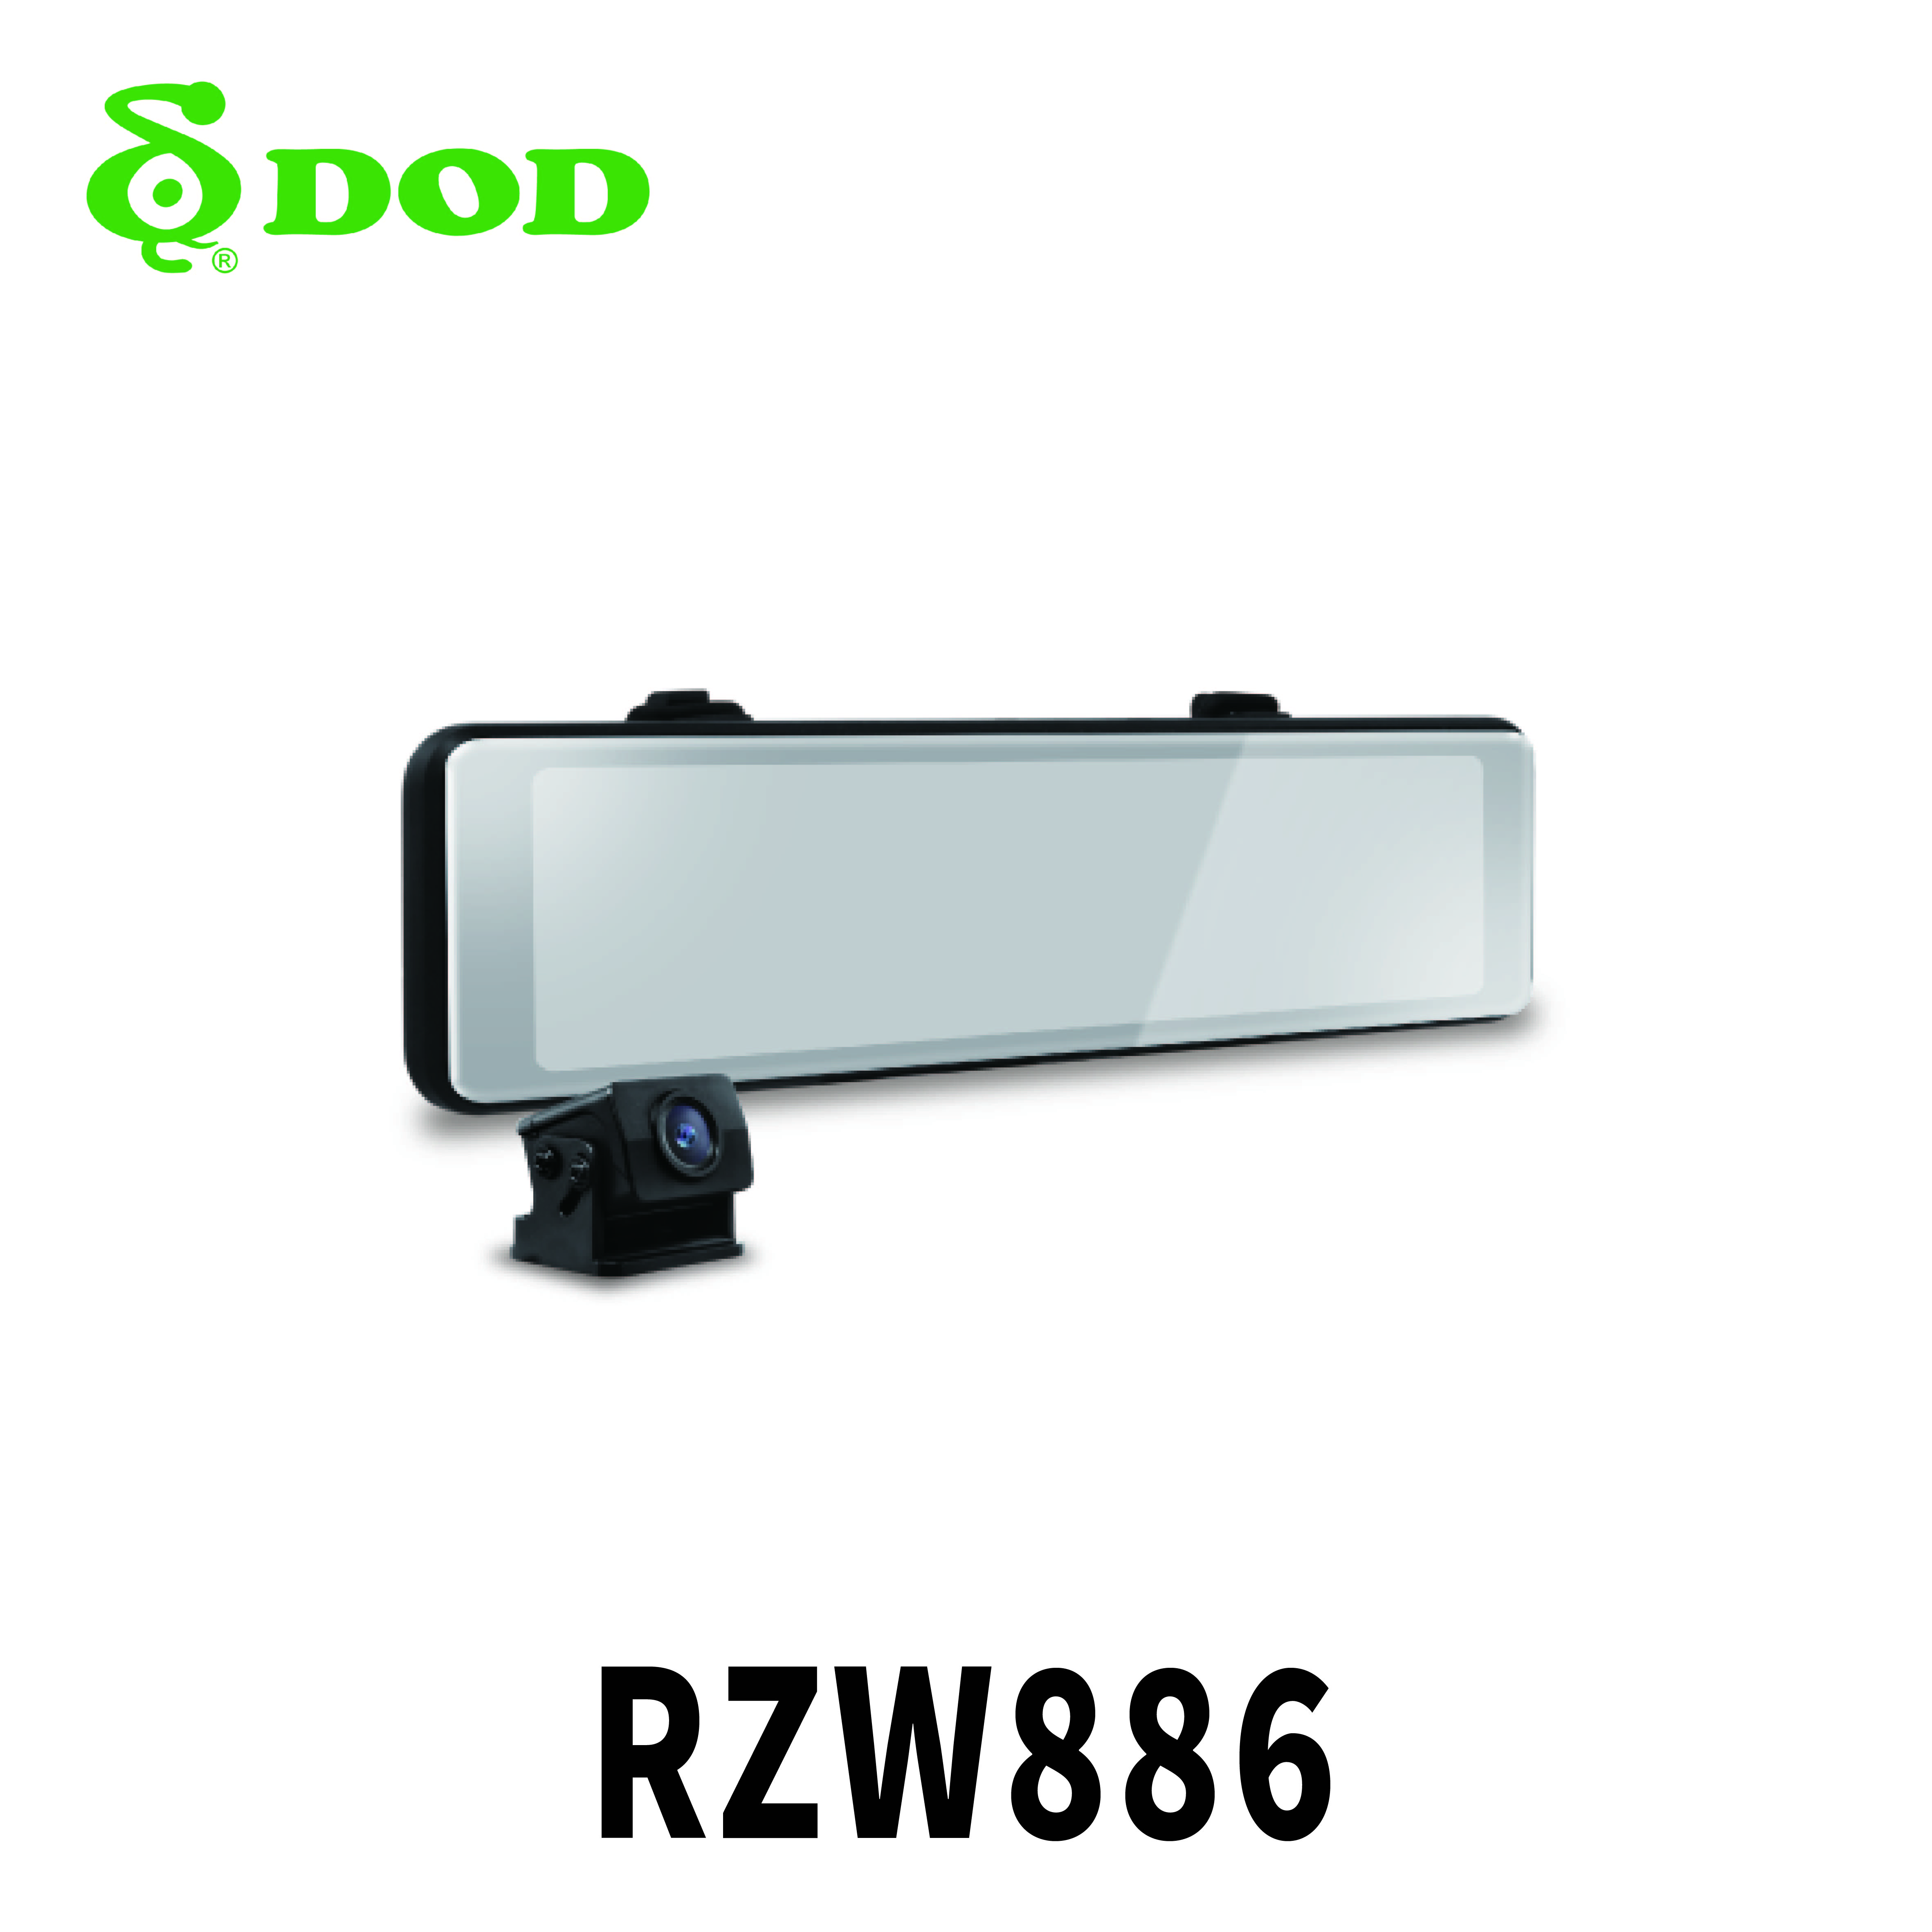 DOD RZW886 2K+1080p 觸控式 GPS 雙鏡頭行車記錄器